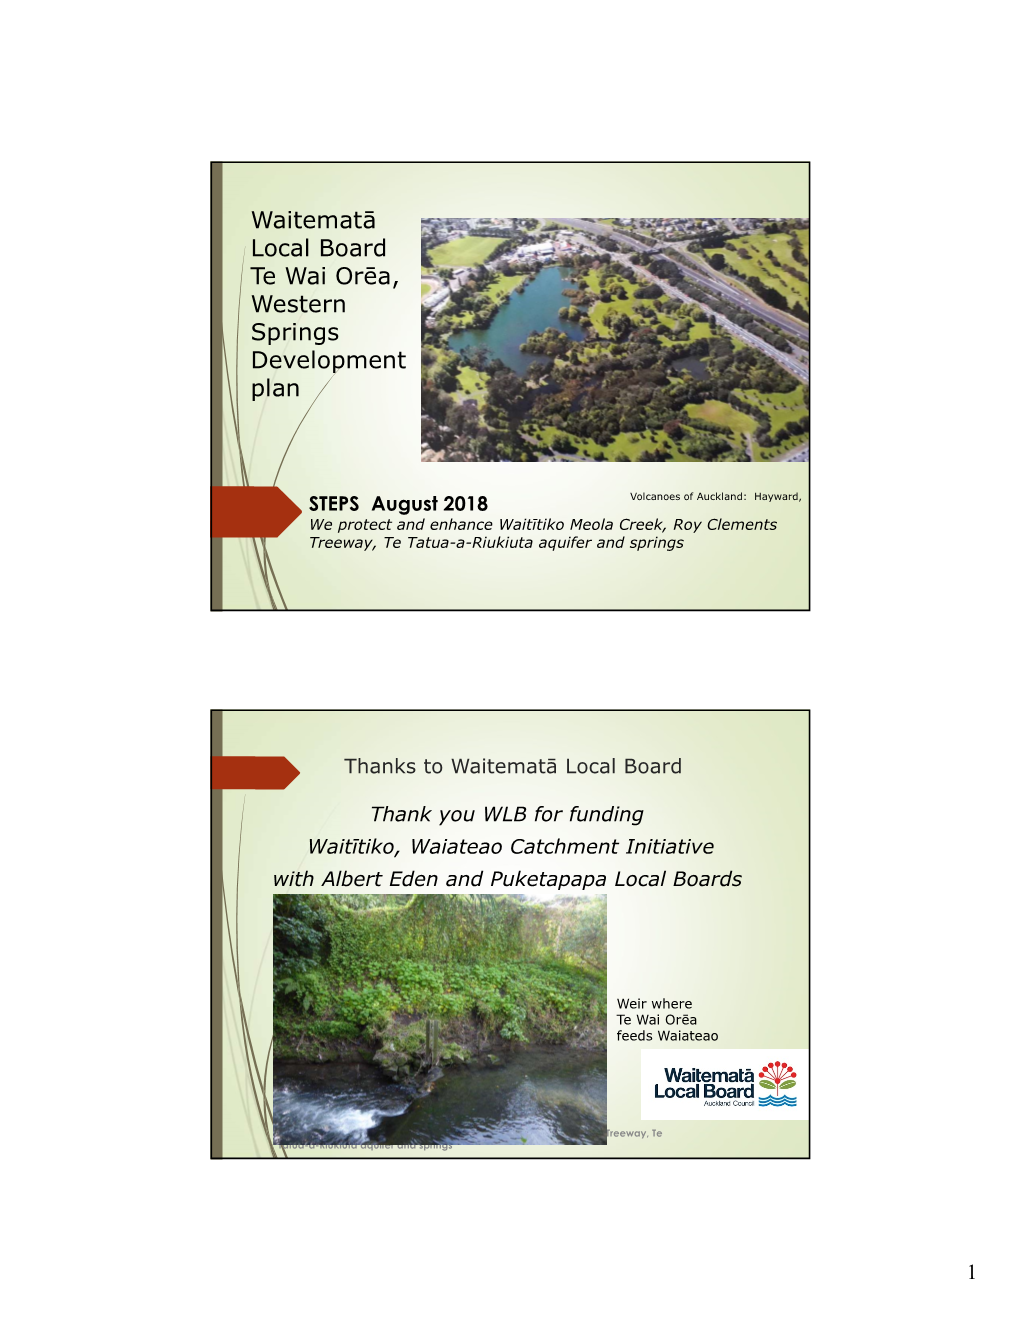 Waitematā Local Board Te Wai Orēa, Western Springs Development Plan